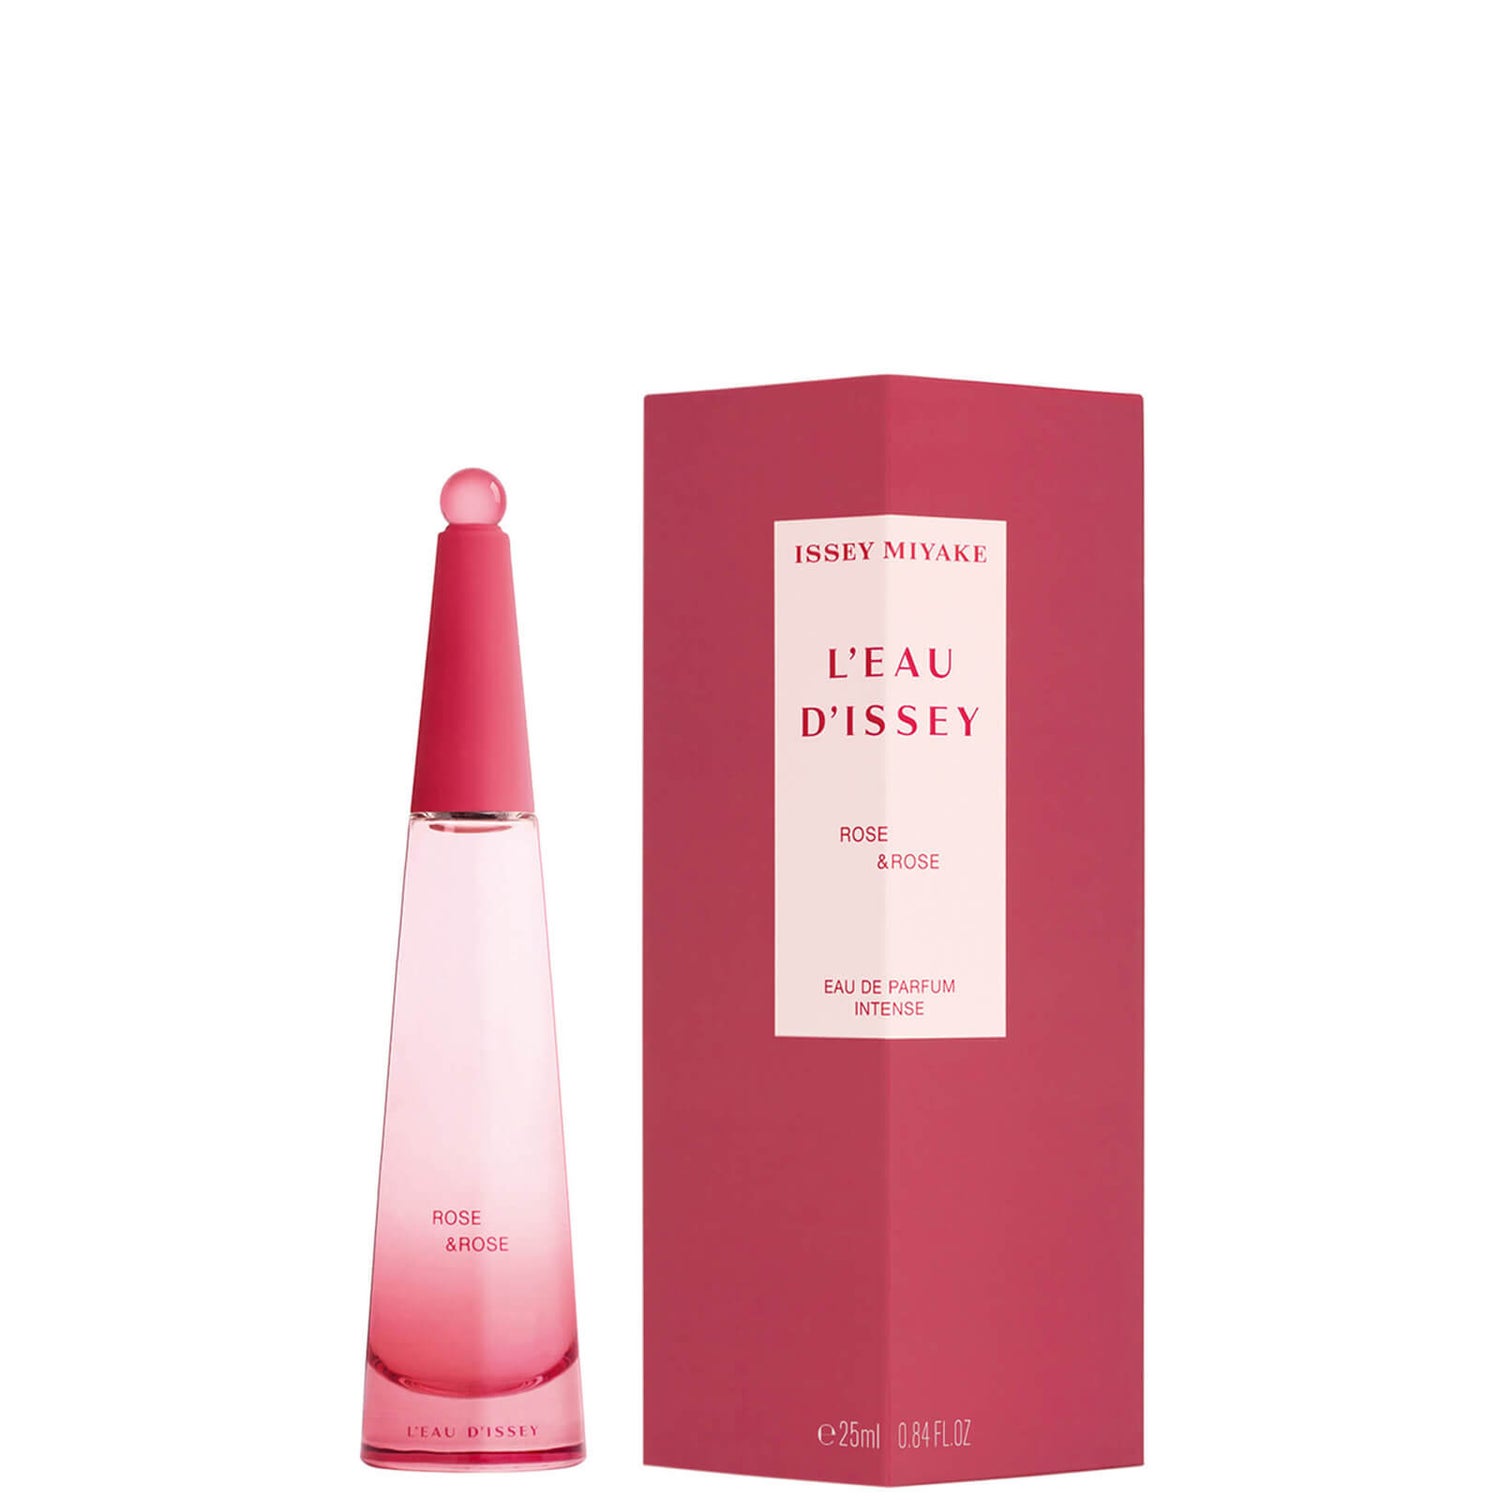 Issey Miyake L'eau D'Issey Rose & Rose Eau de Parfum Intense - 25ml ...